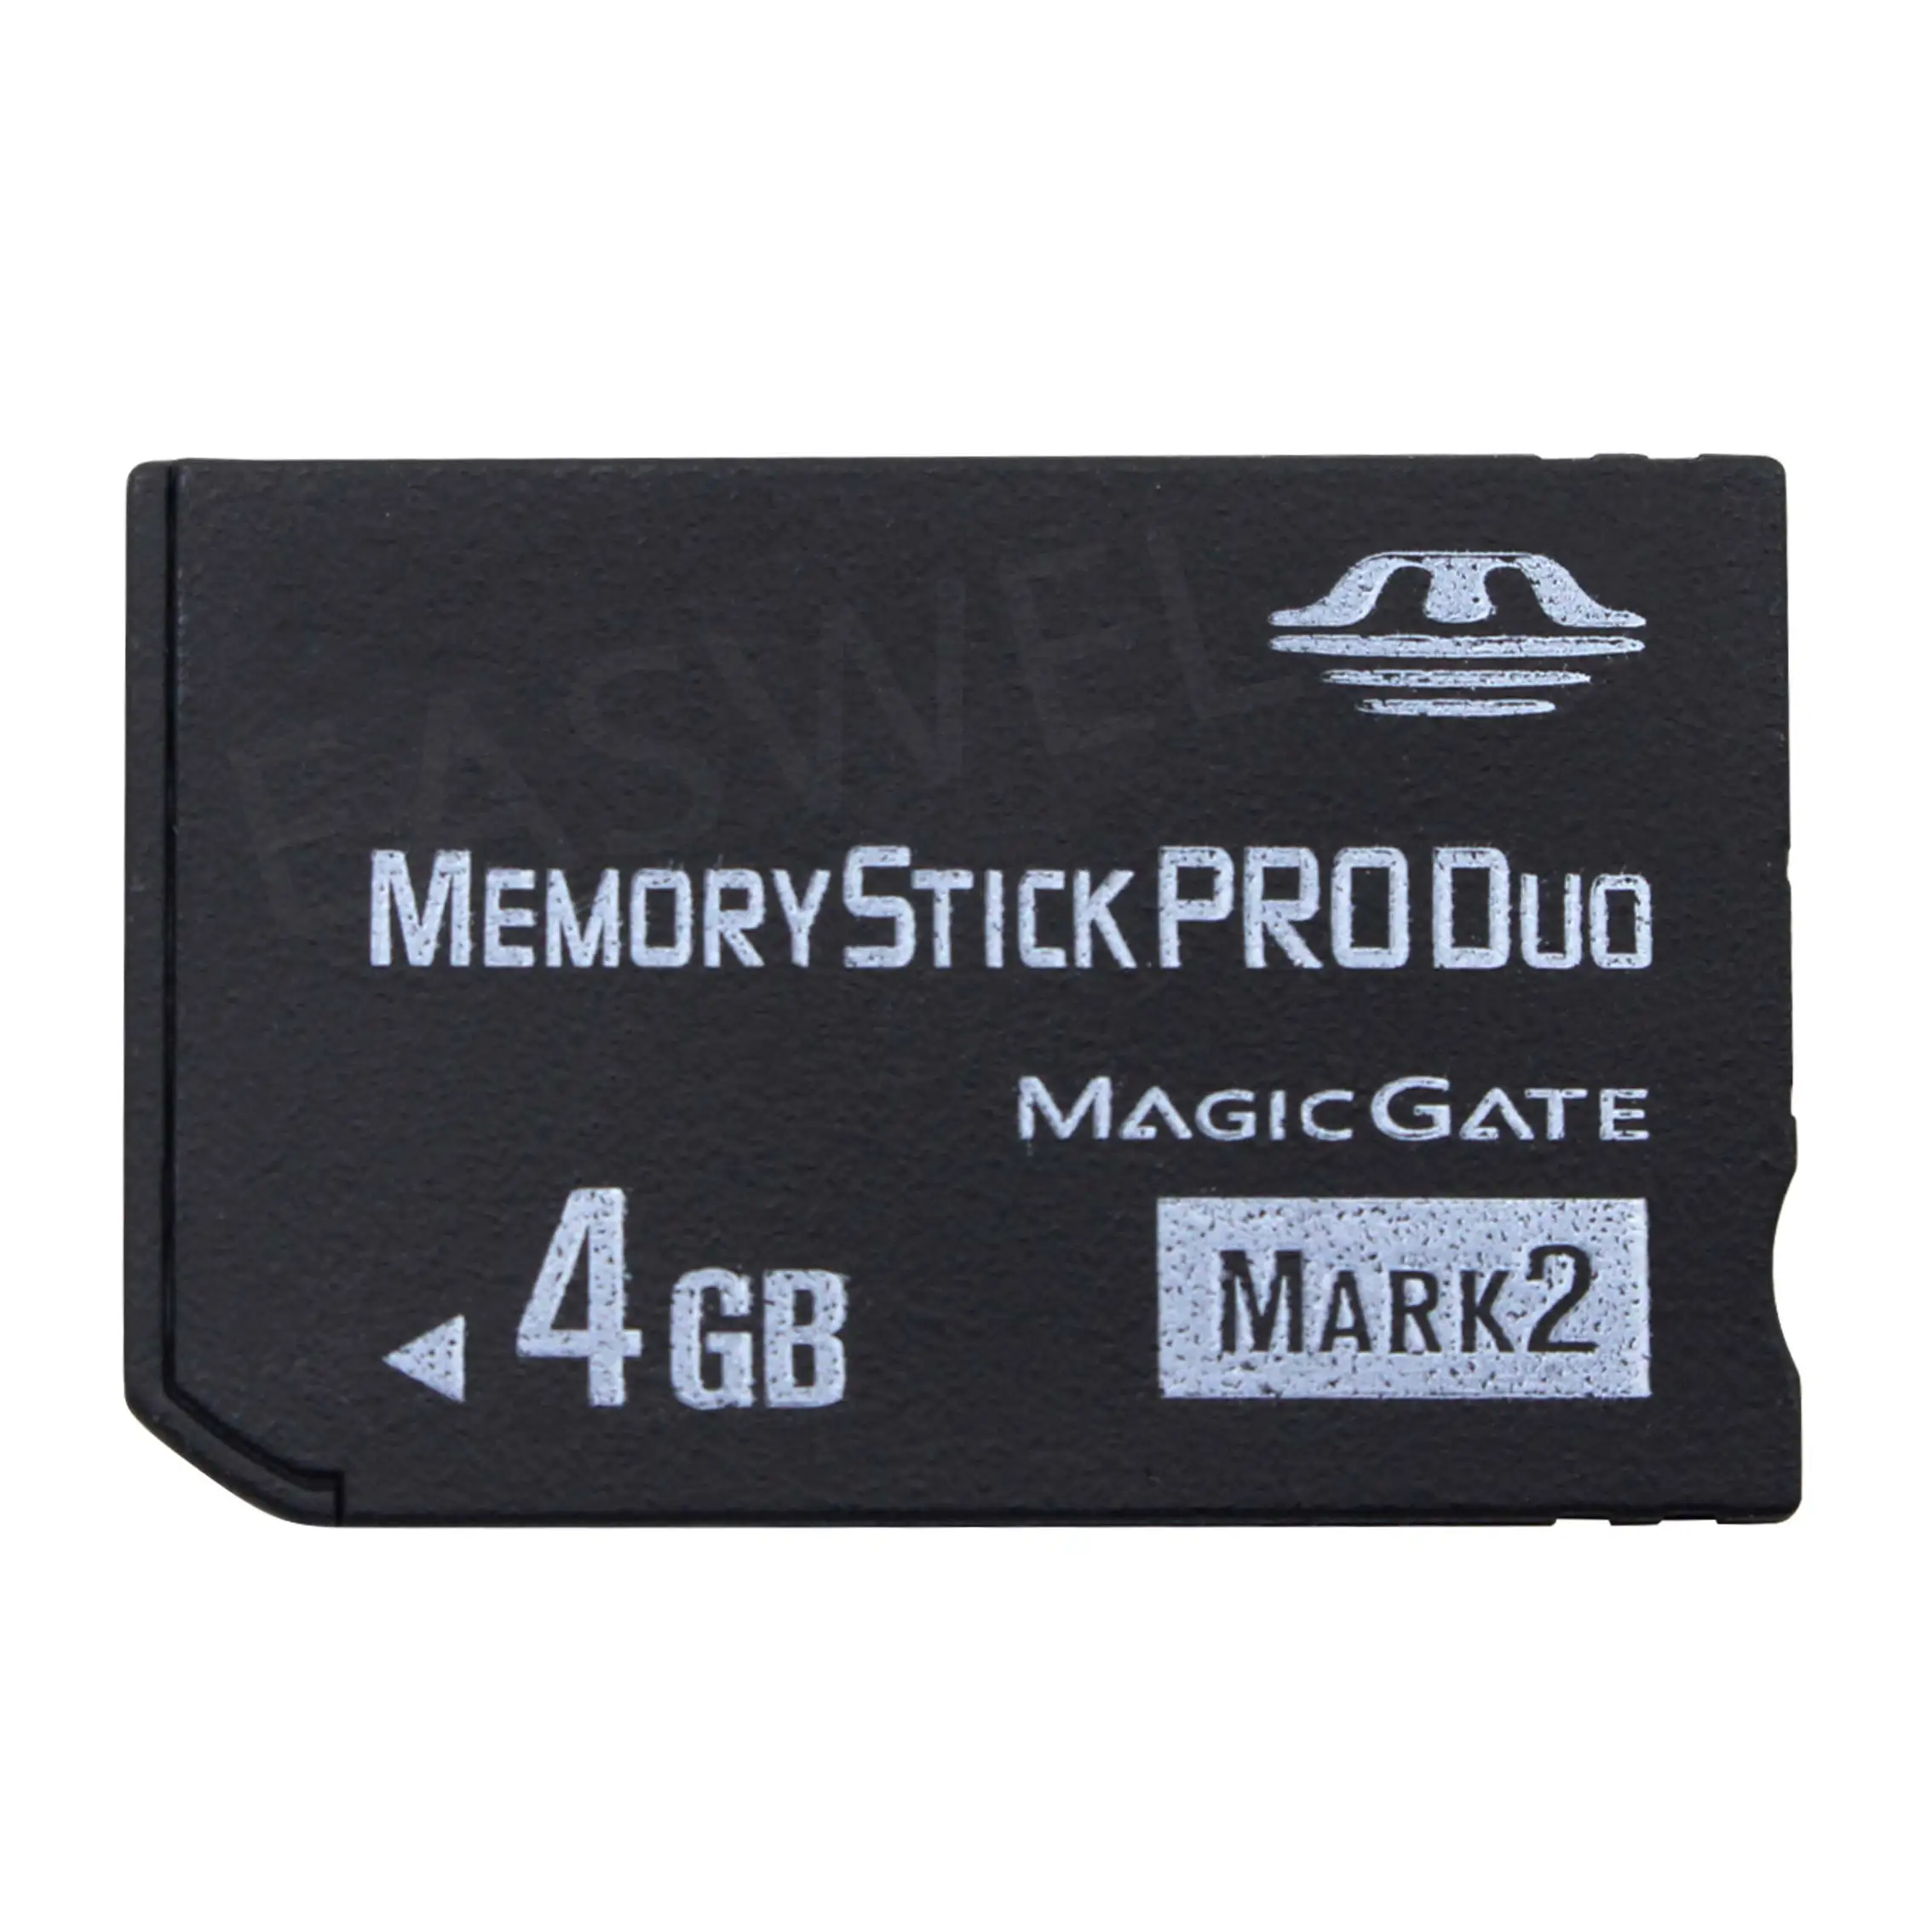 4GB Memory Stick Pro Duo MS Card, Memory card for Camera/Recorder - ANKUX Tech Co., Ltd